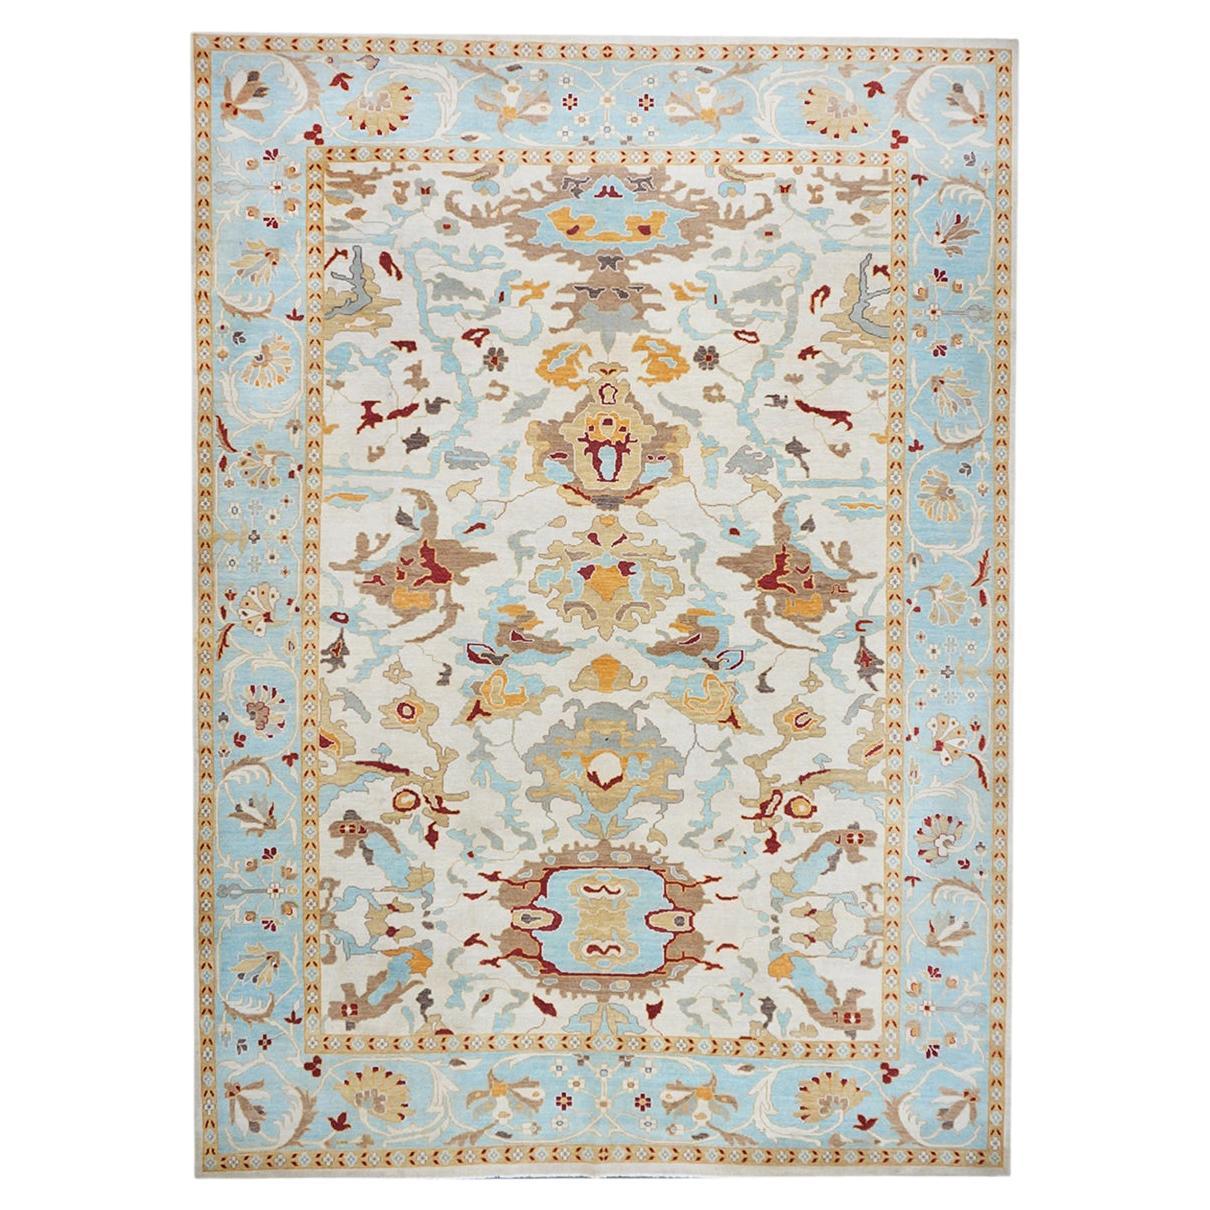 Tapis artisanal bleu, ivoire et orange Sultanabad Master 10x14 du 21e siècle